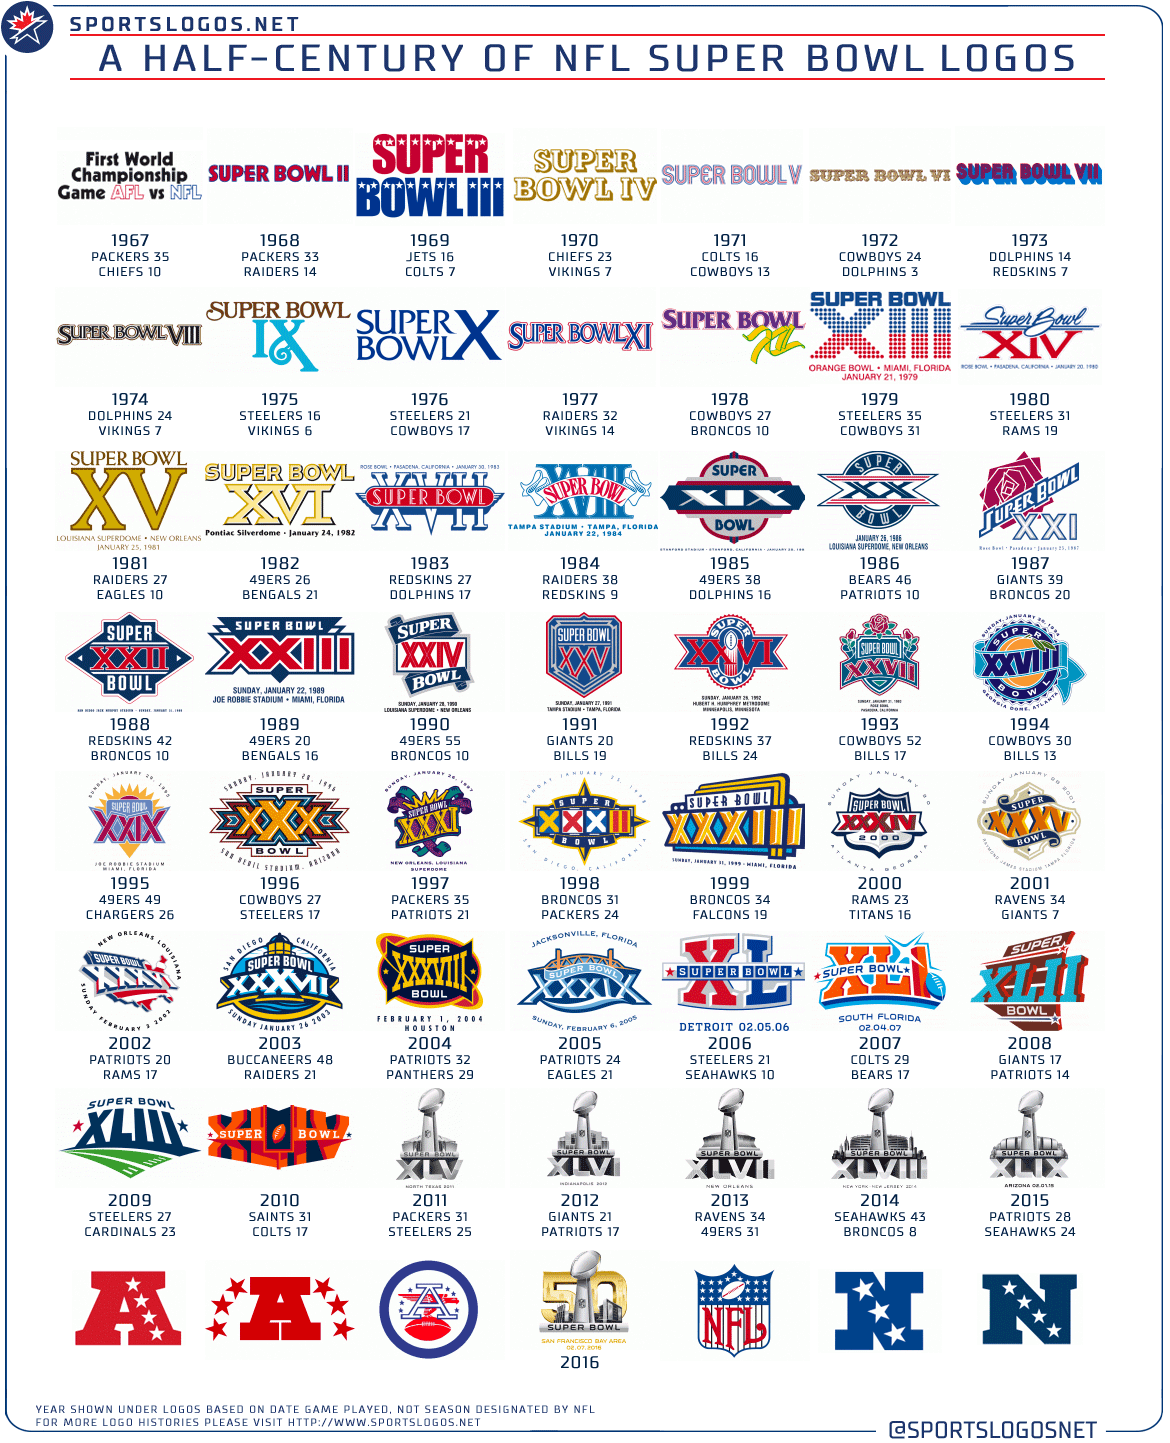 Todd Radom on X: Select sketches for Super Bowl XXXVIII logo